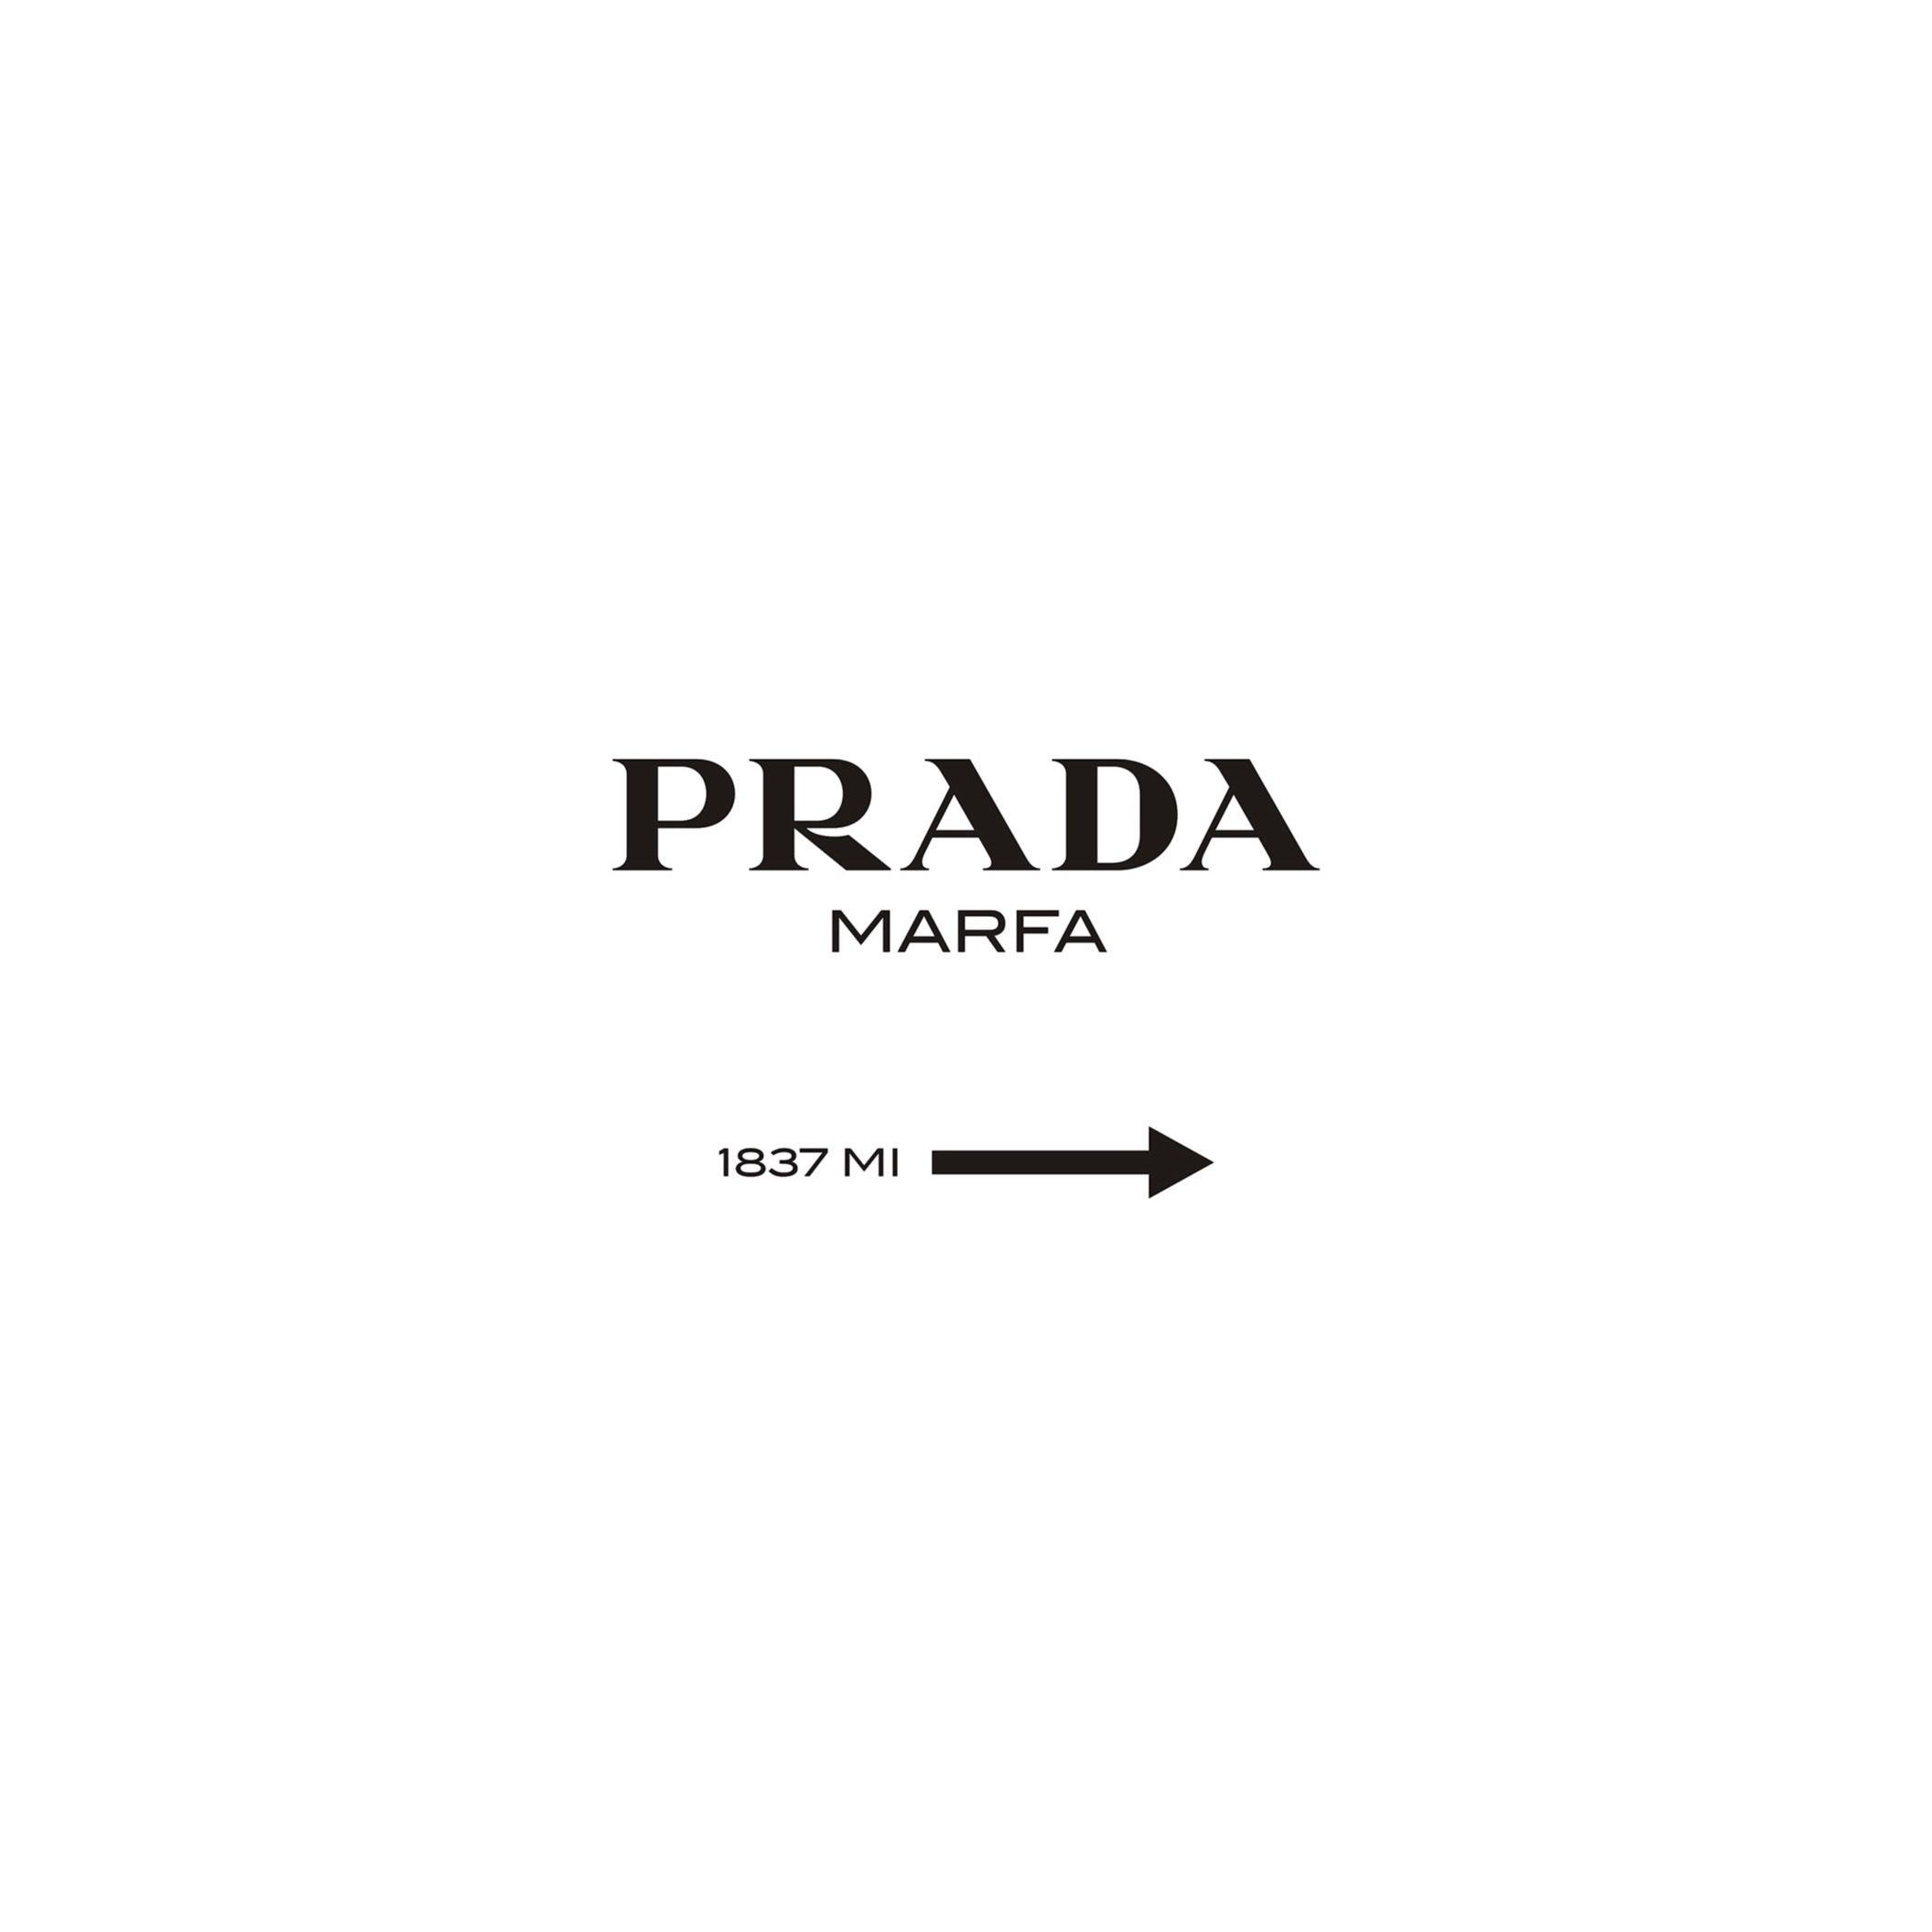 Prada: A permanent land art project by artists Elmgreen and Dragset, Logo. 2120x2120 HD Wallpaper.